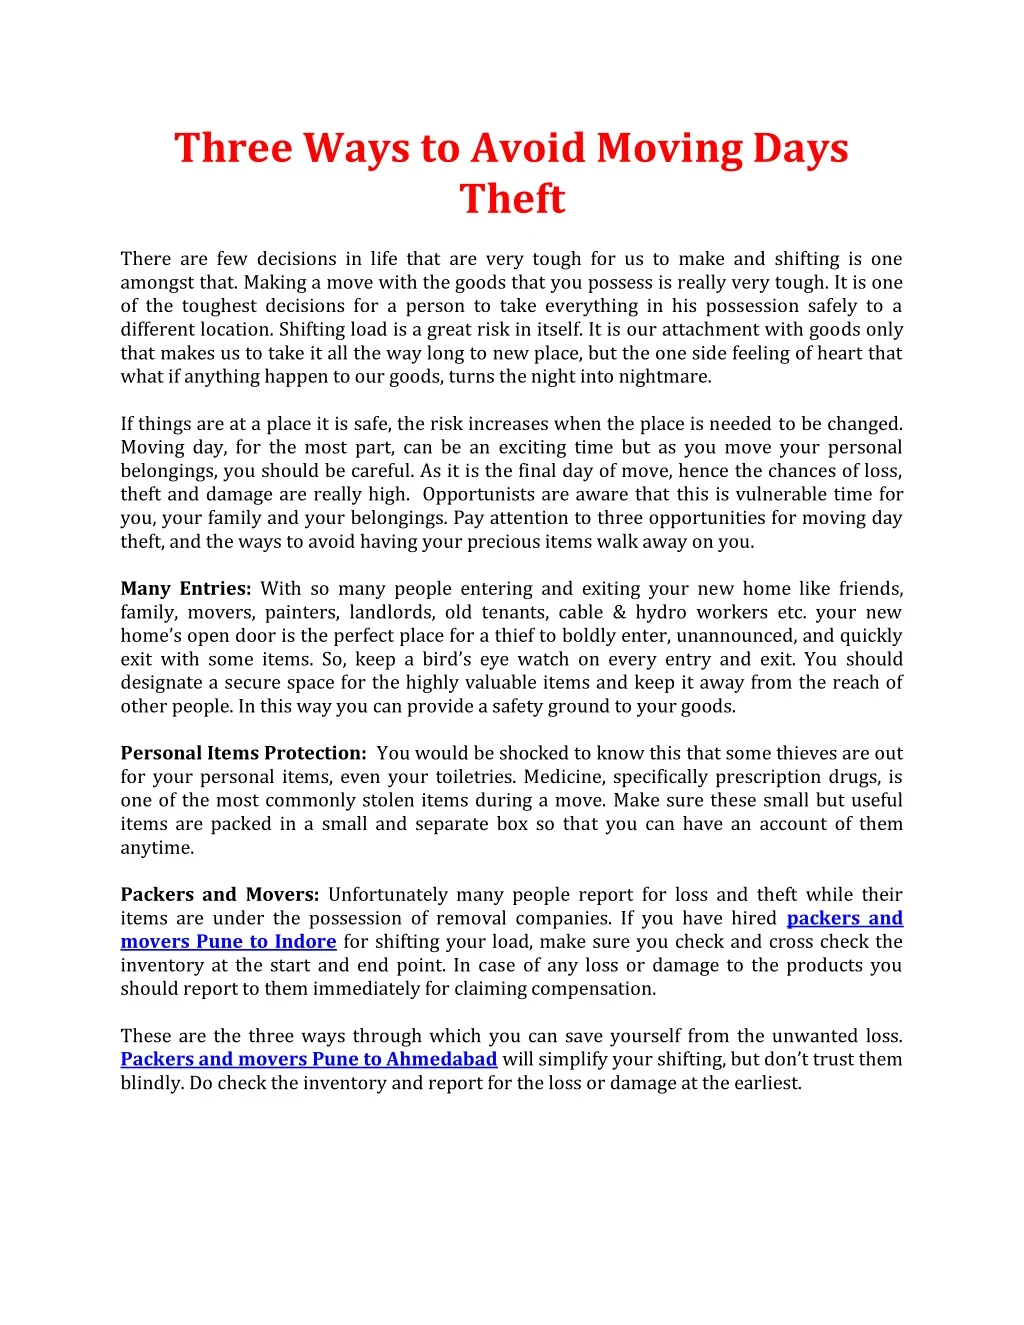 three ways to avoid moving days theft